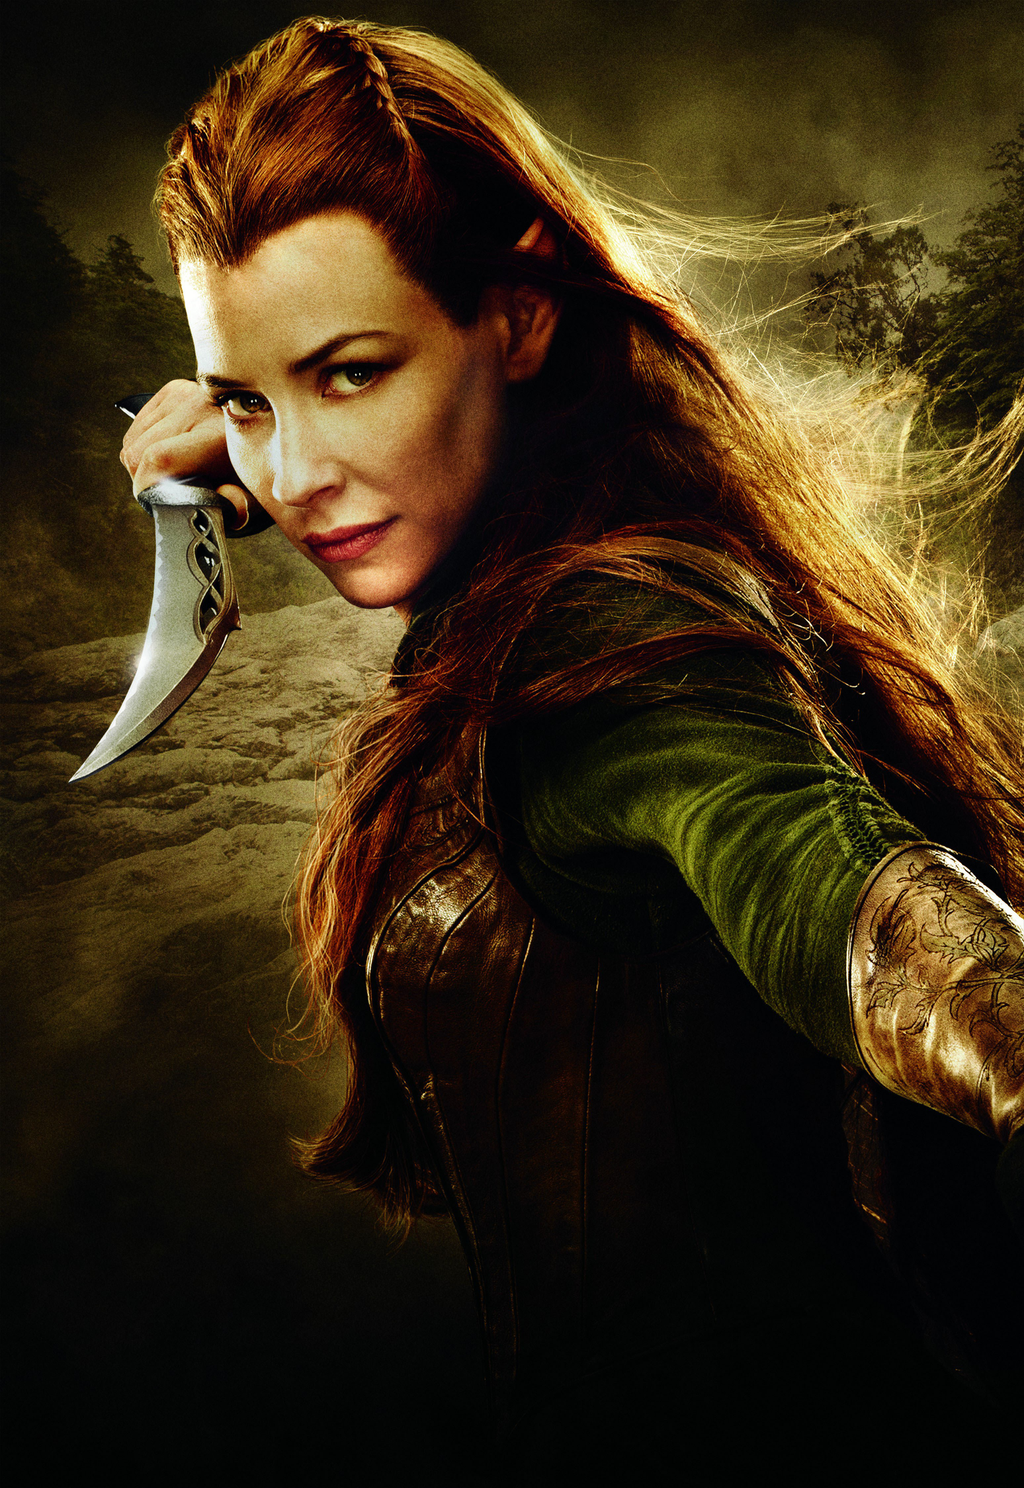 The Hobbit : The Desolation of Smaug Cinema Tolkien adventure heroic  fantasy WOMAN elf redhead KNIFE, Evangeline Lilly 